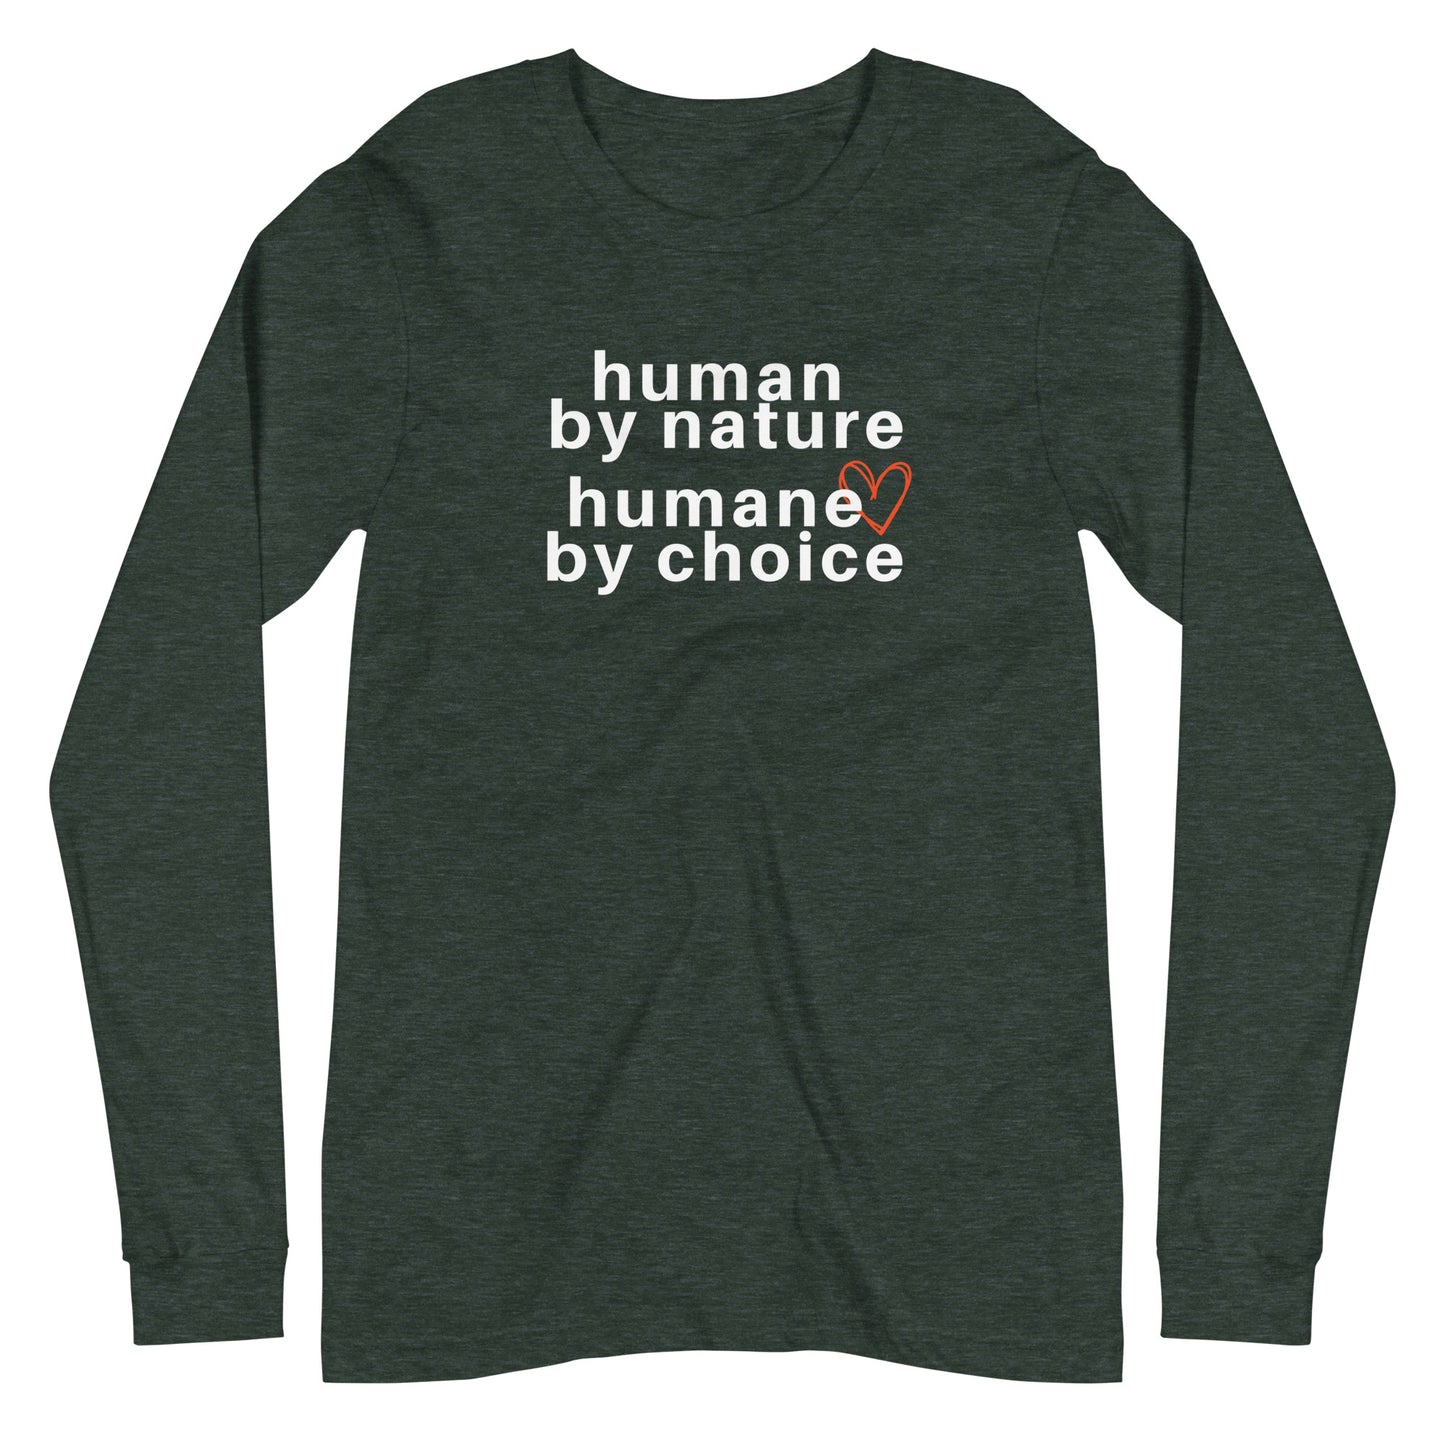 Humane By Choice - Long Sleeve T-Shirt